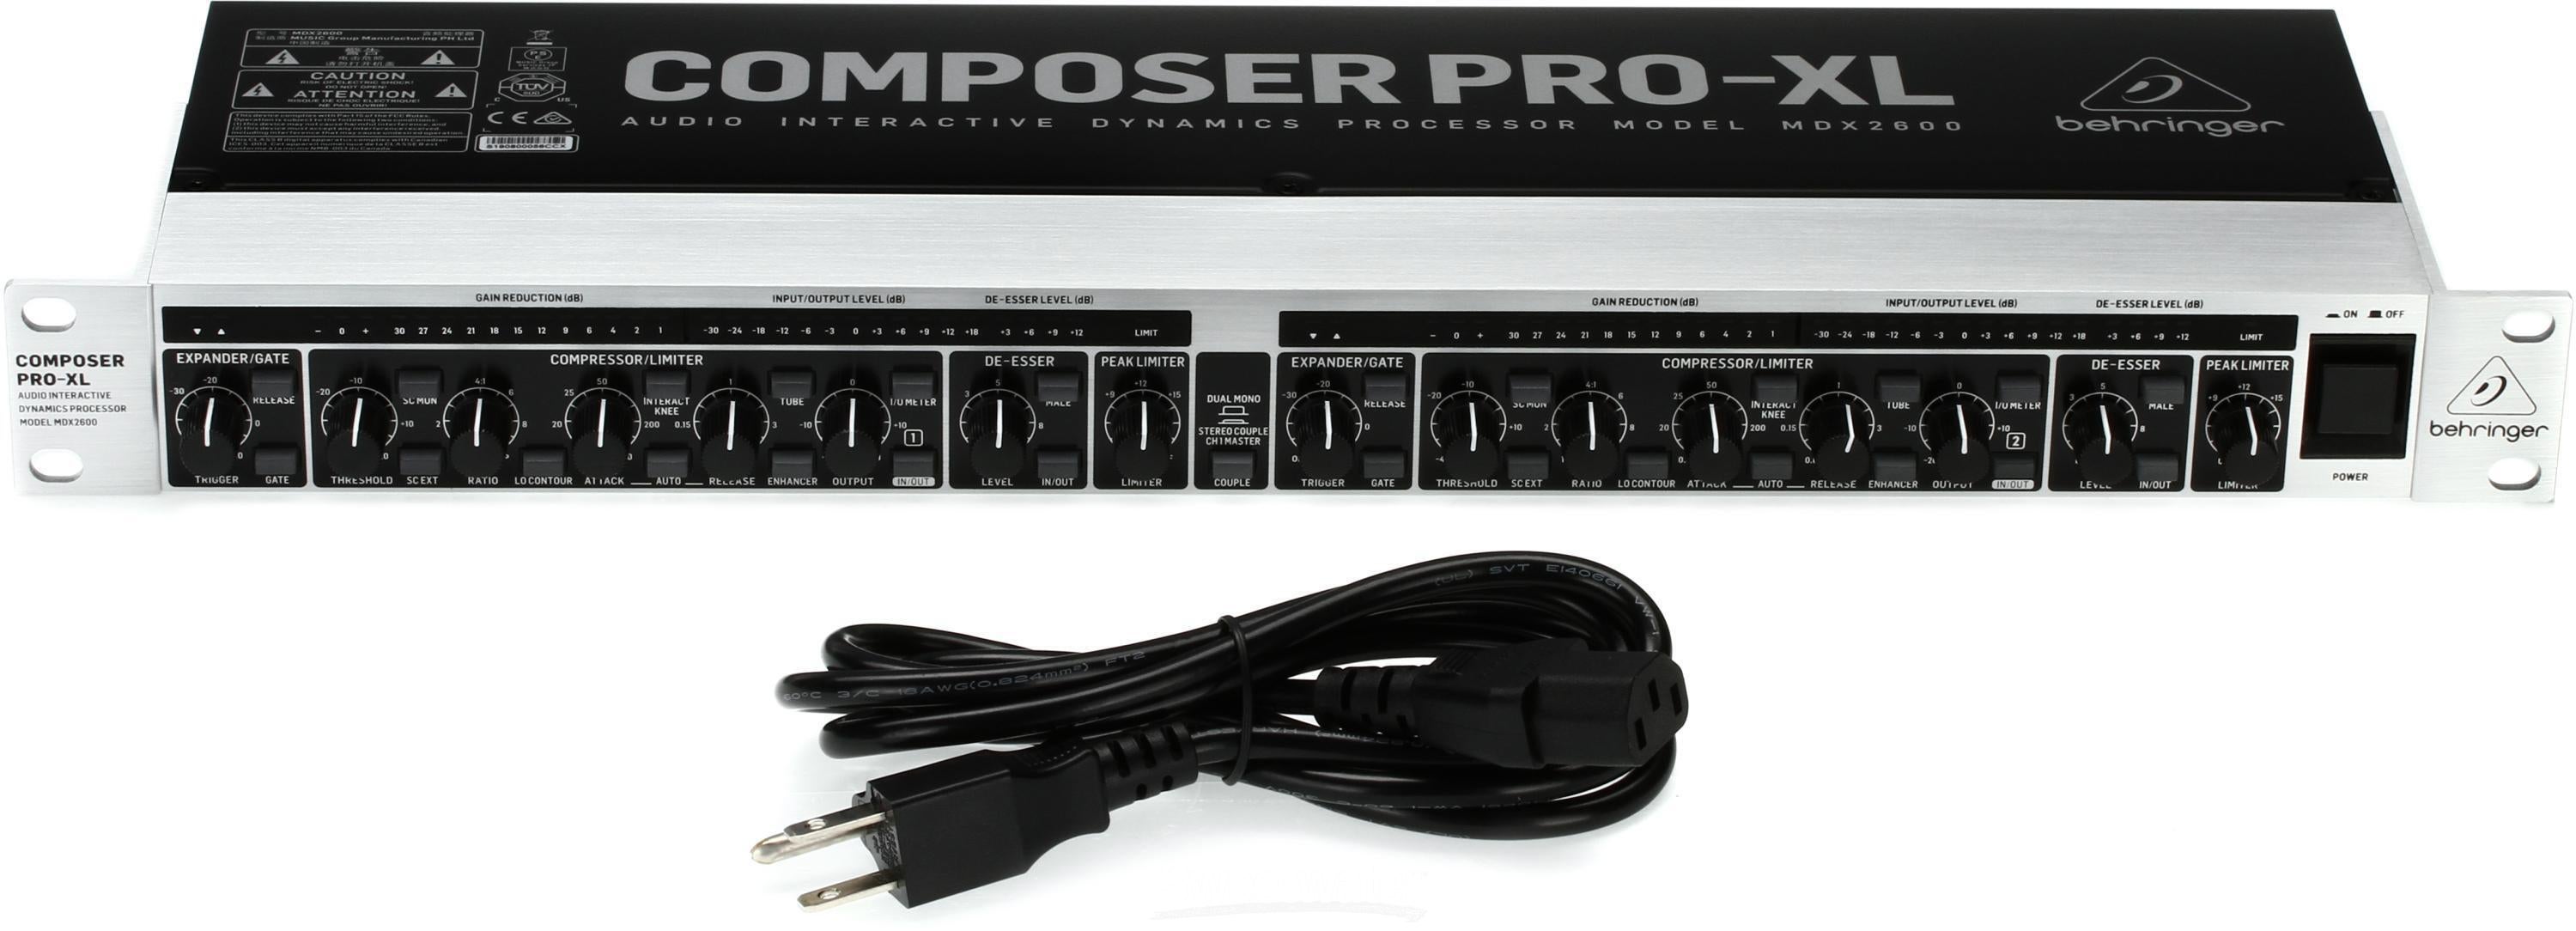 Behringer Composer Pro-XL MDX2600 Compressor with De-esser